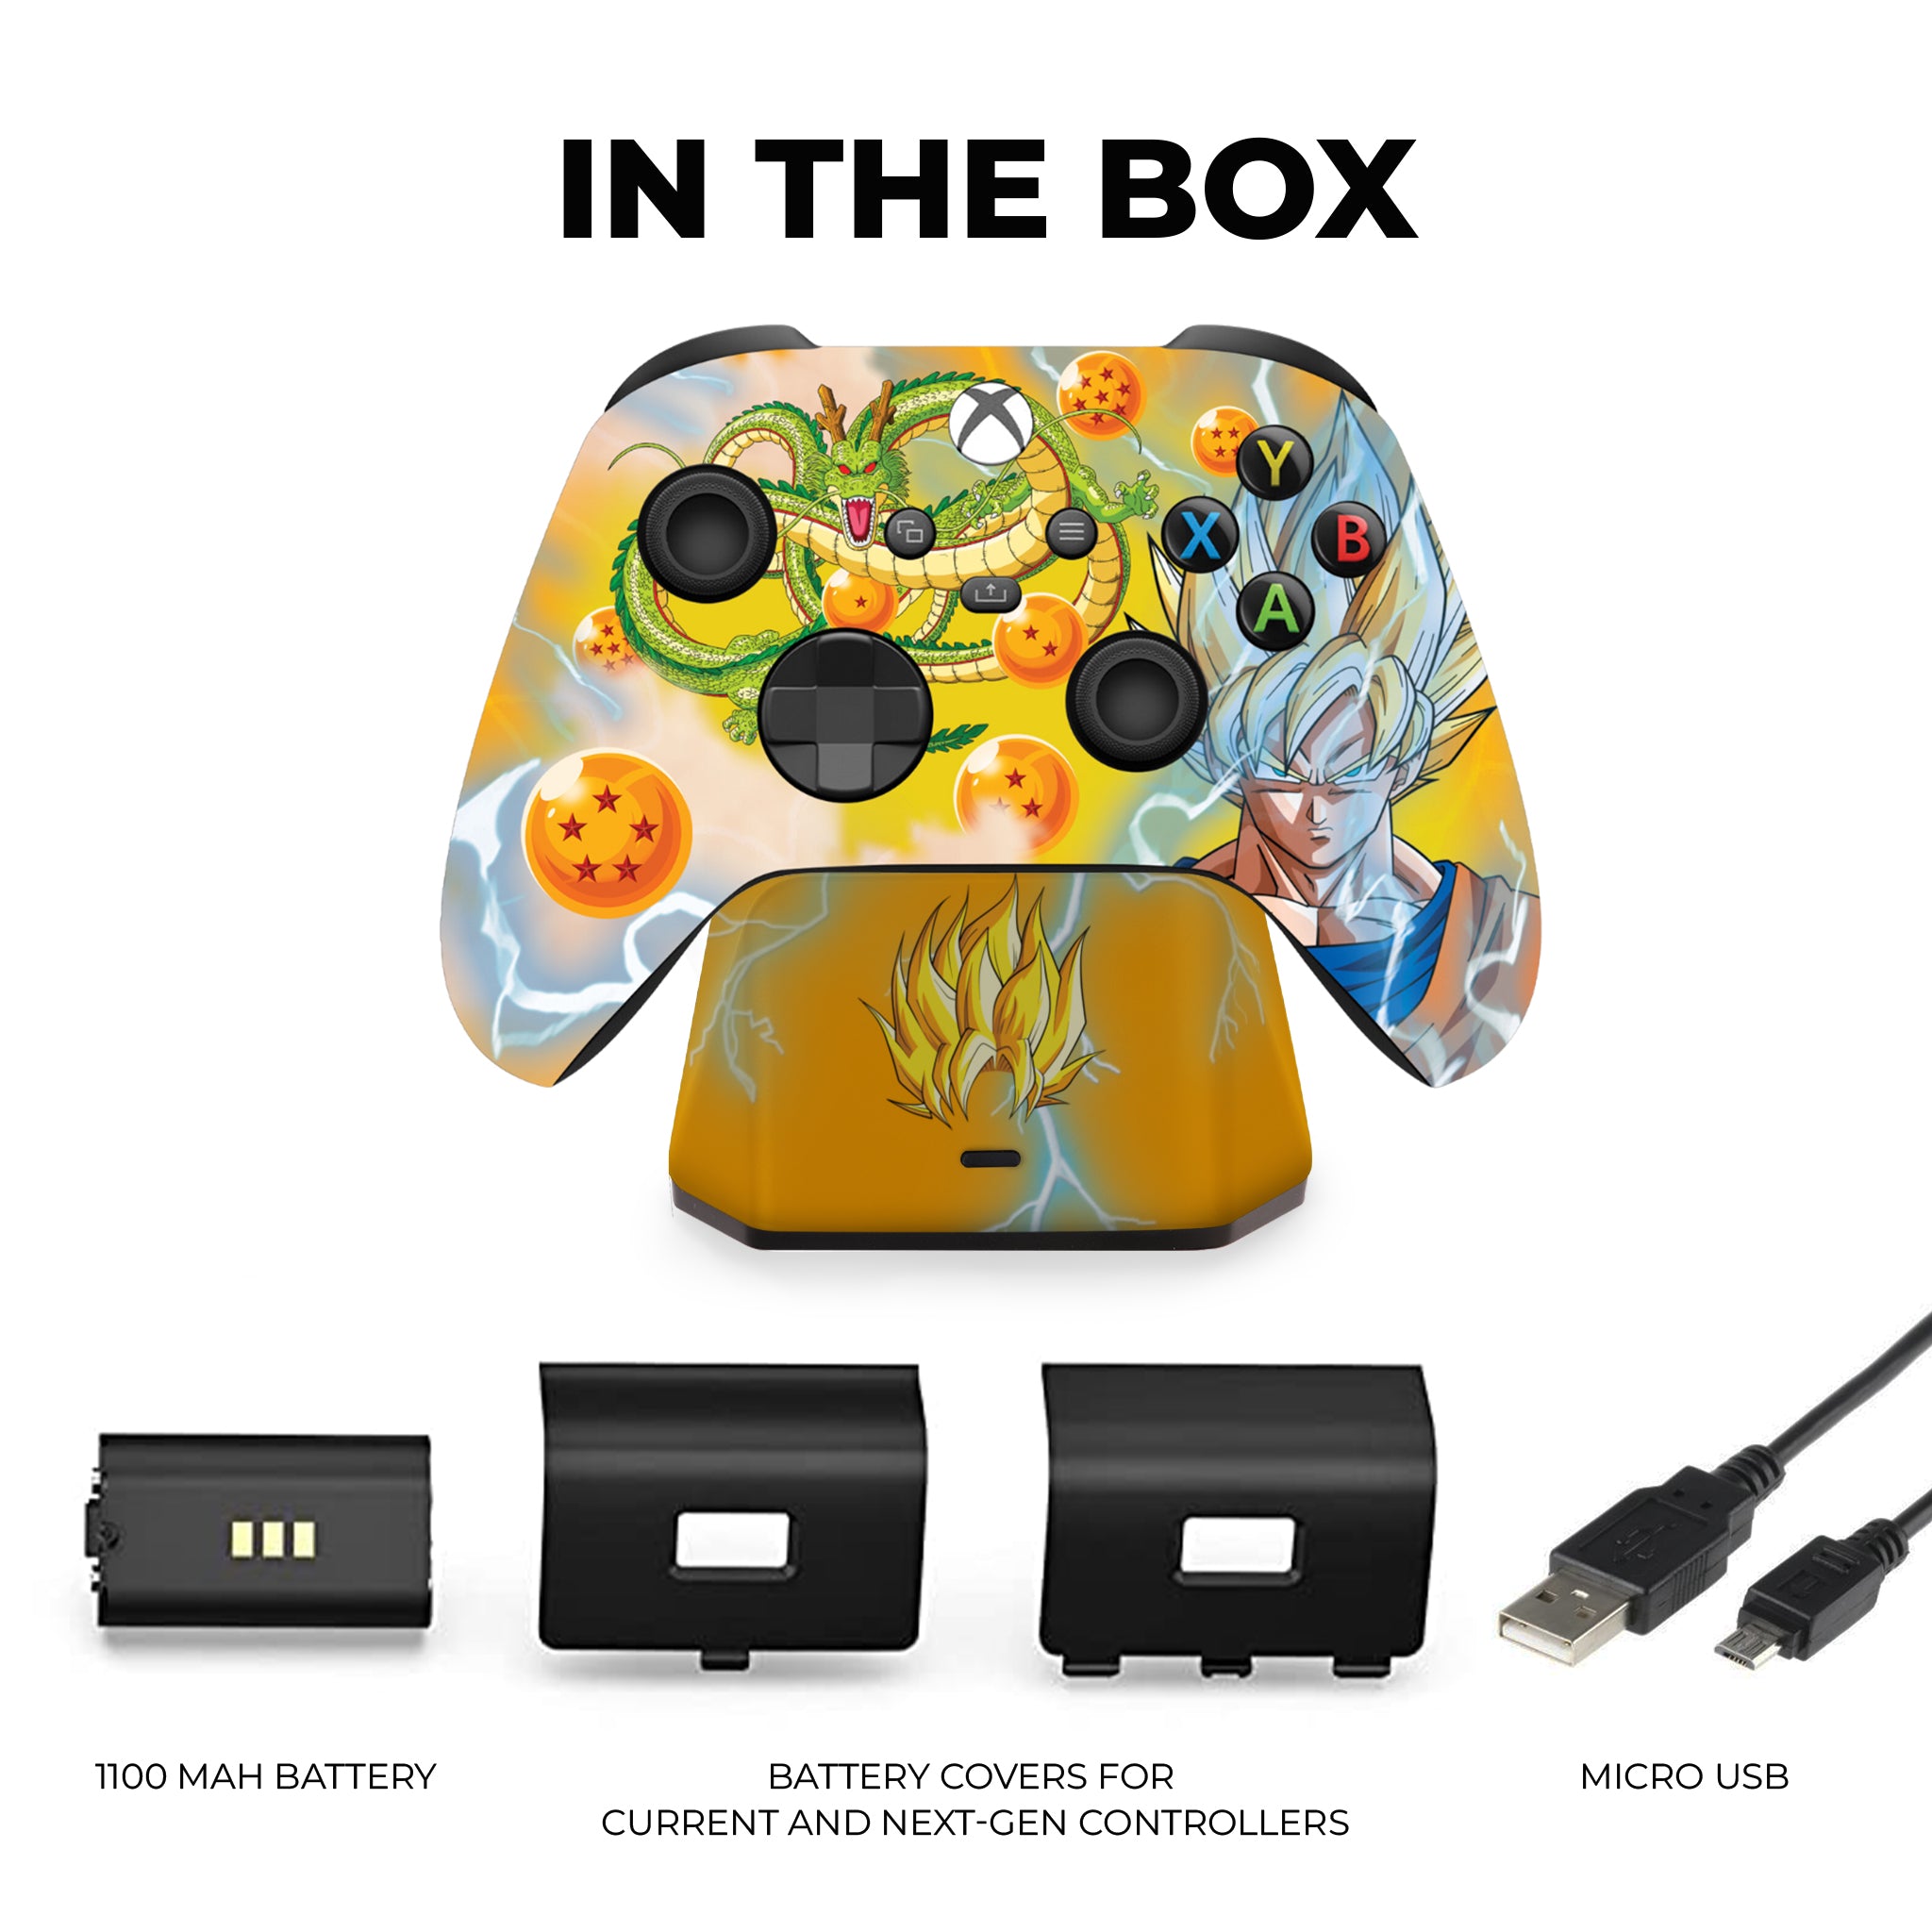 DBZ Goku & Shenron Inspired XBox Series X Controller